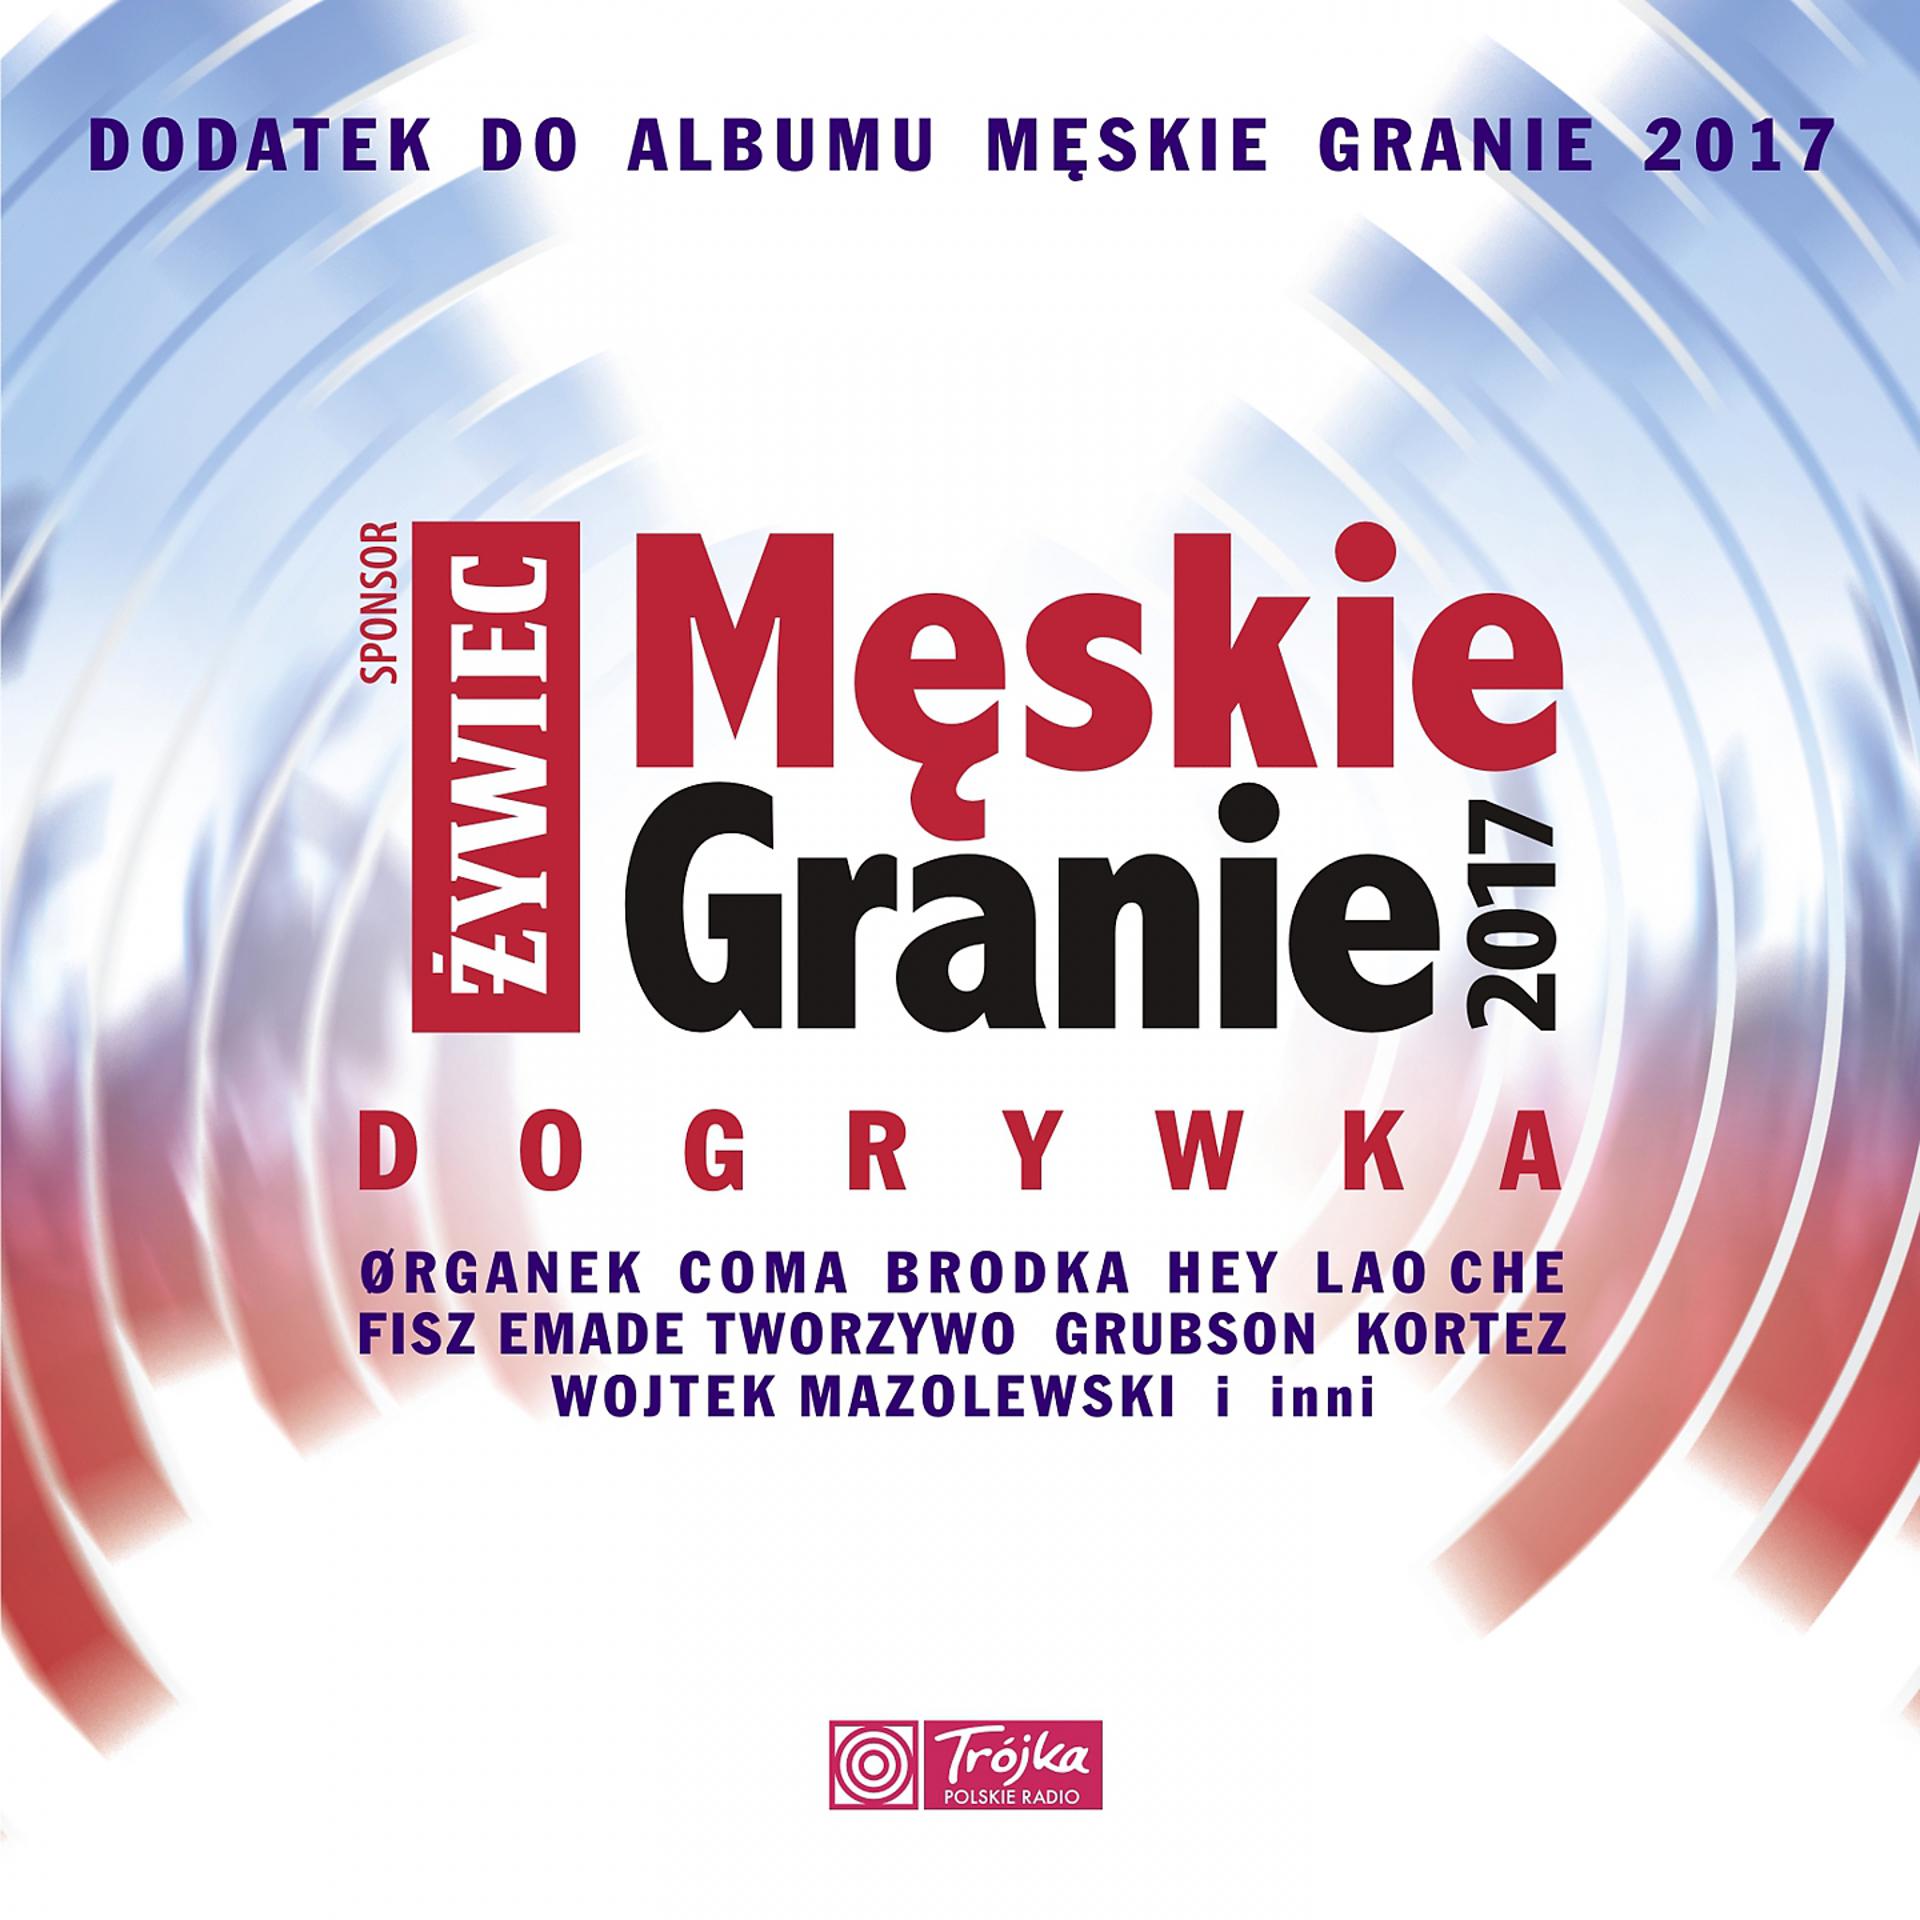 Постер альбома Męskie granie 2017 dogrywka